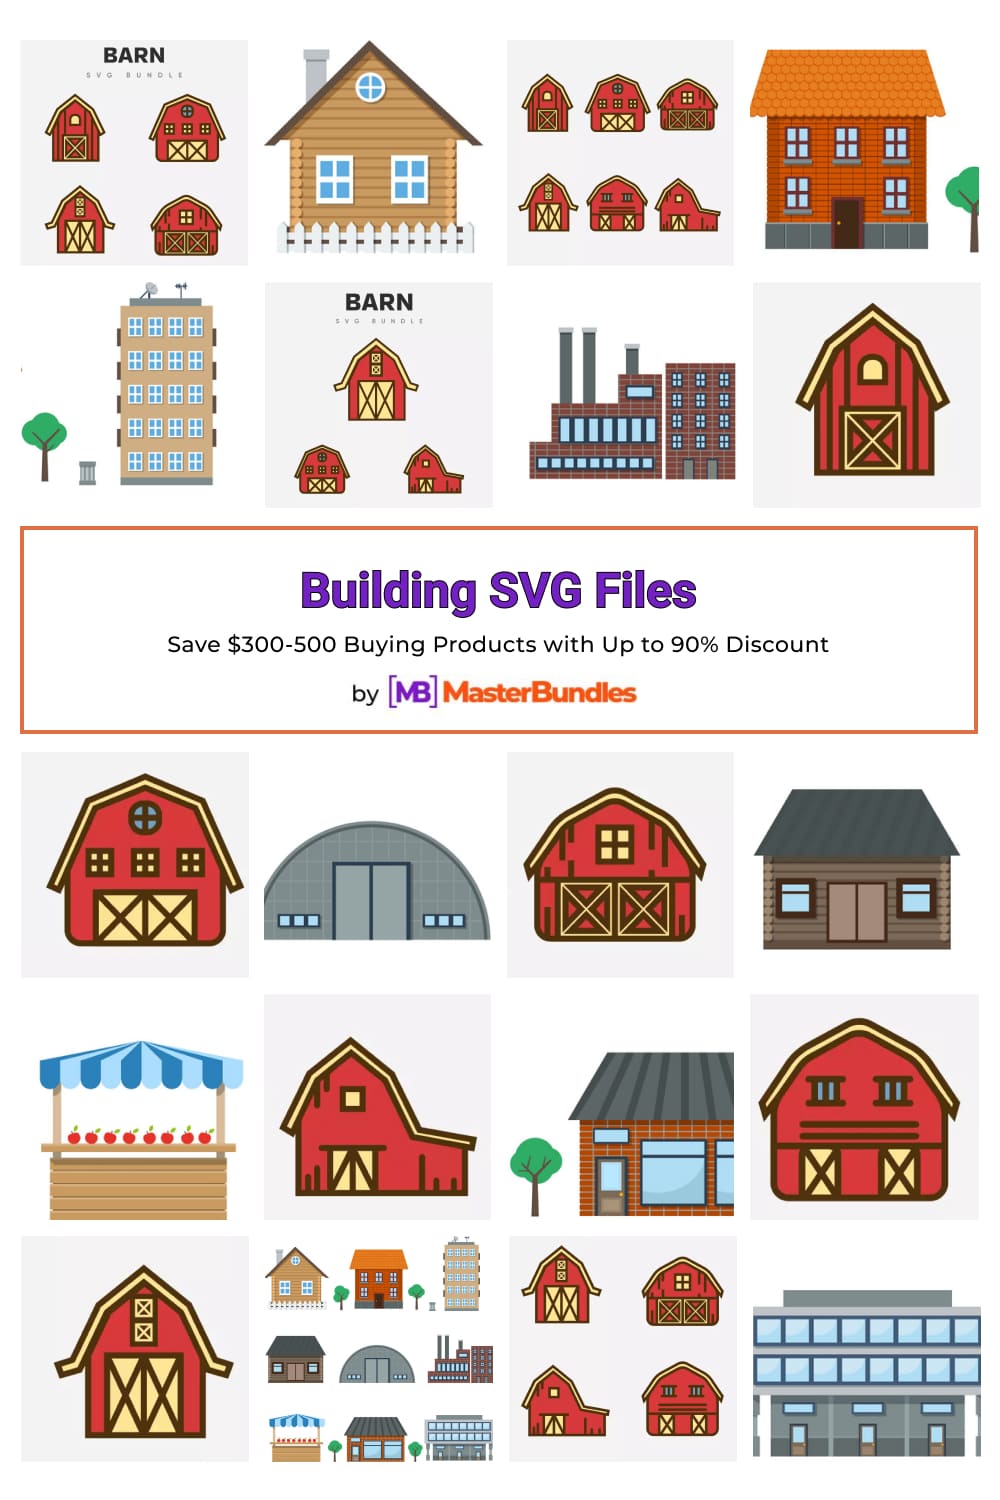 Building SVG Files for Pinterest.